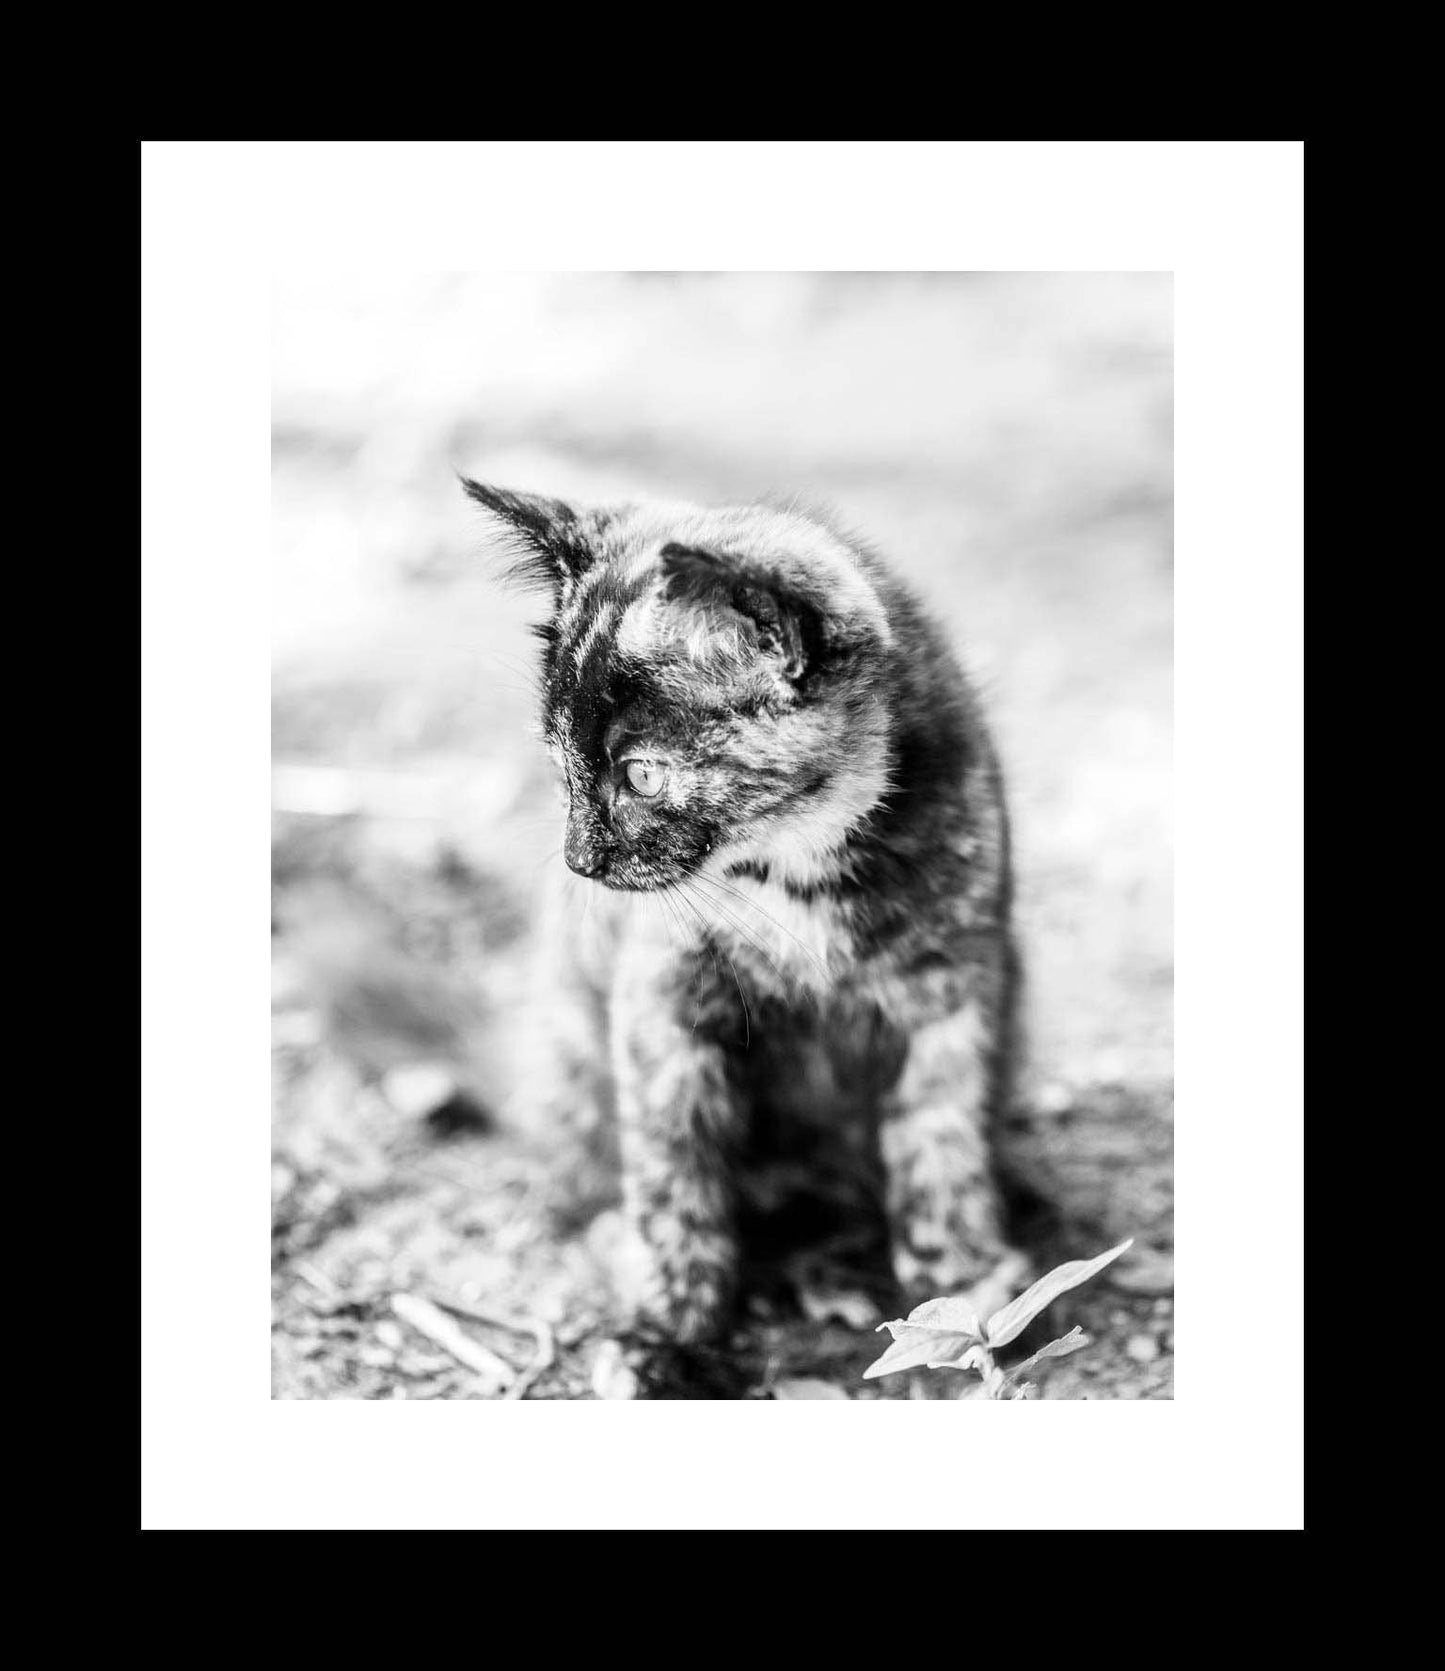 Black and White Kitten Photography Print, Cat Portrait, Canvas Wall Art, Rustic Nursery Decor, Rustic Animal Farmhouse Wall Decor - eireanneilis